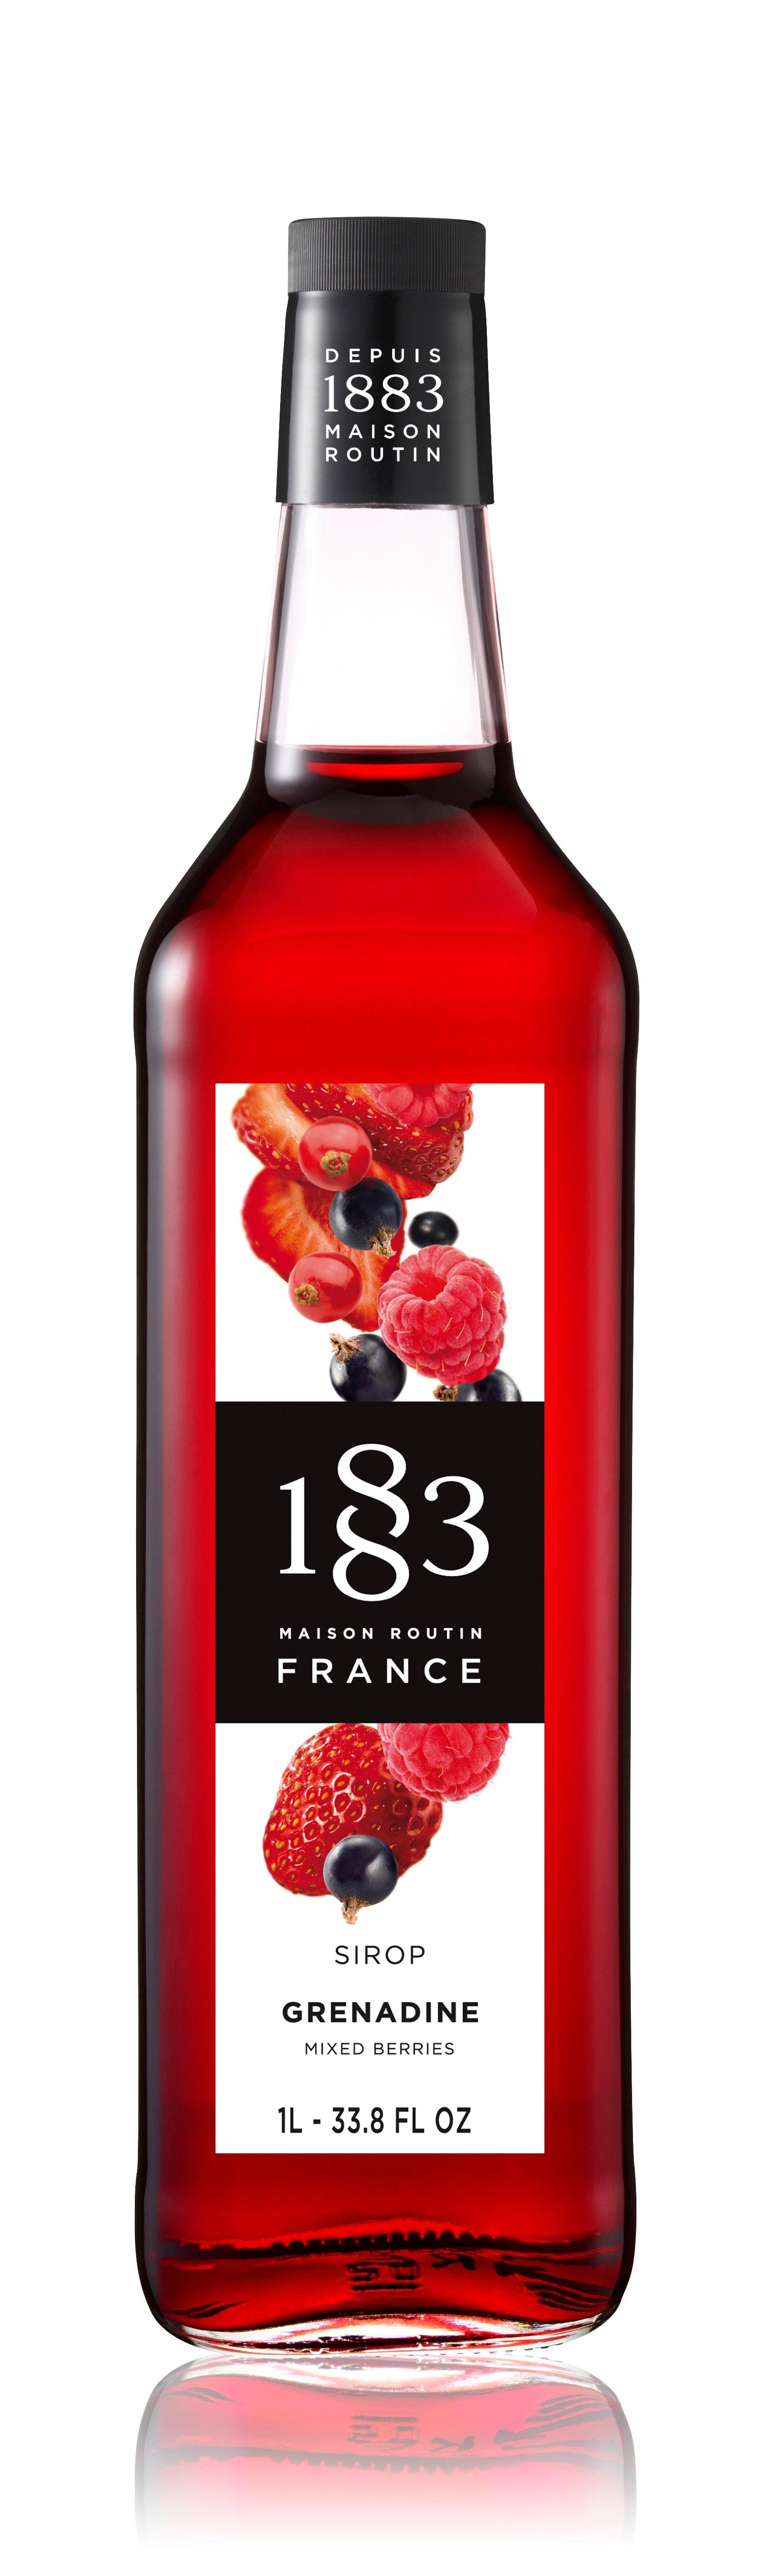 1883 Maison Routin Syrup - 1 Litre Plastic Bottle - Mixed Berries Grenadine Flavour - Vending Superstore